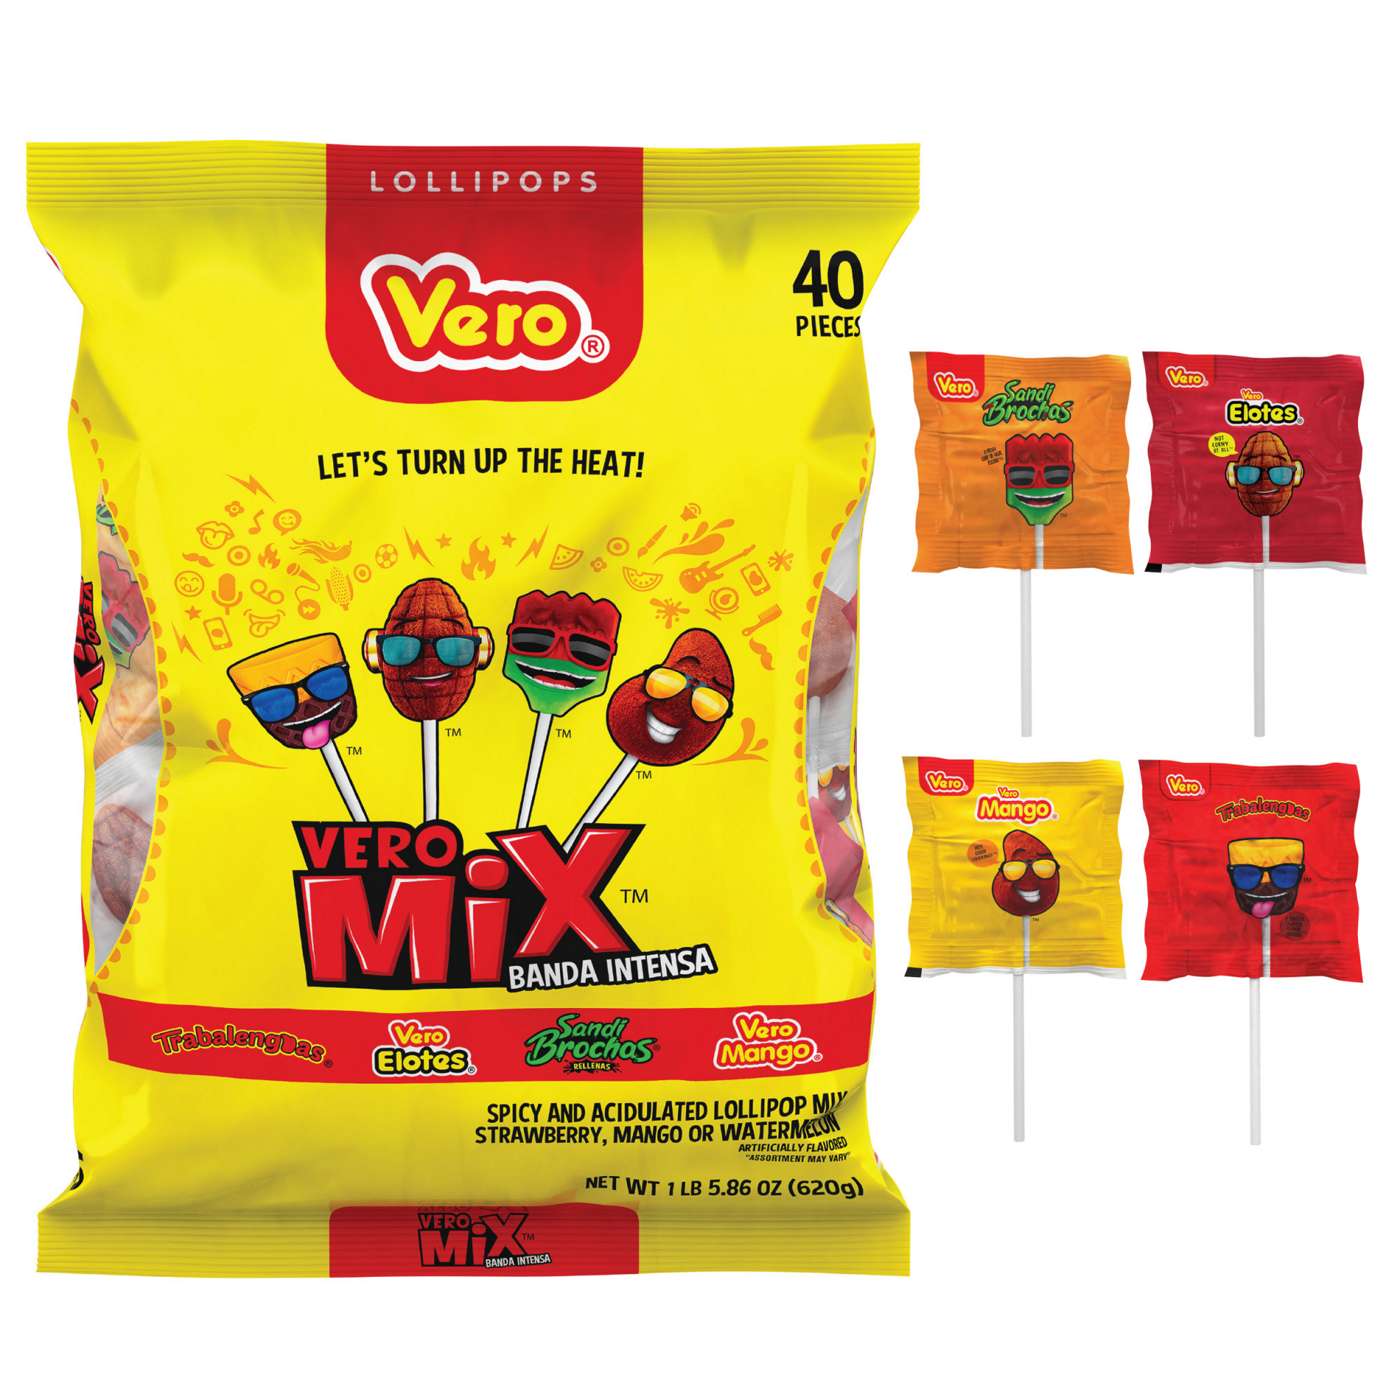 Vero Mix Banda Intensa Chili Lollipops; image 8 of 9